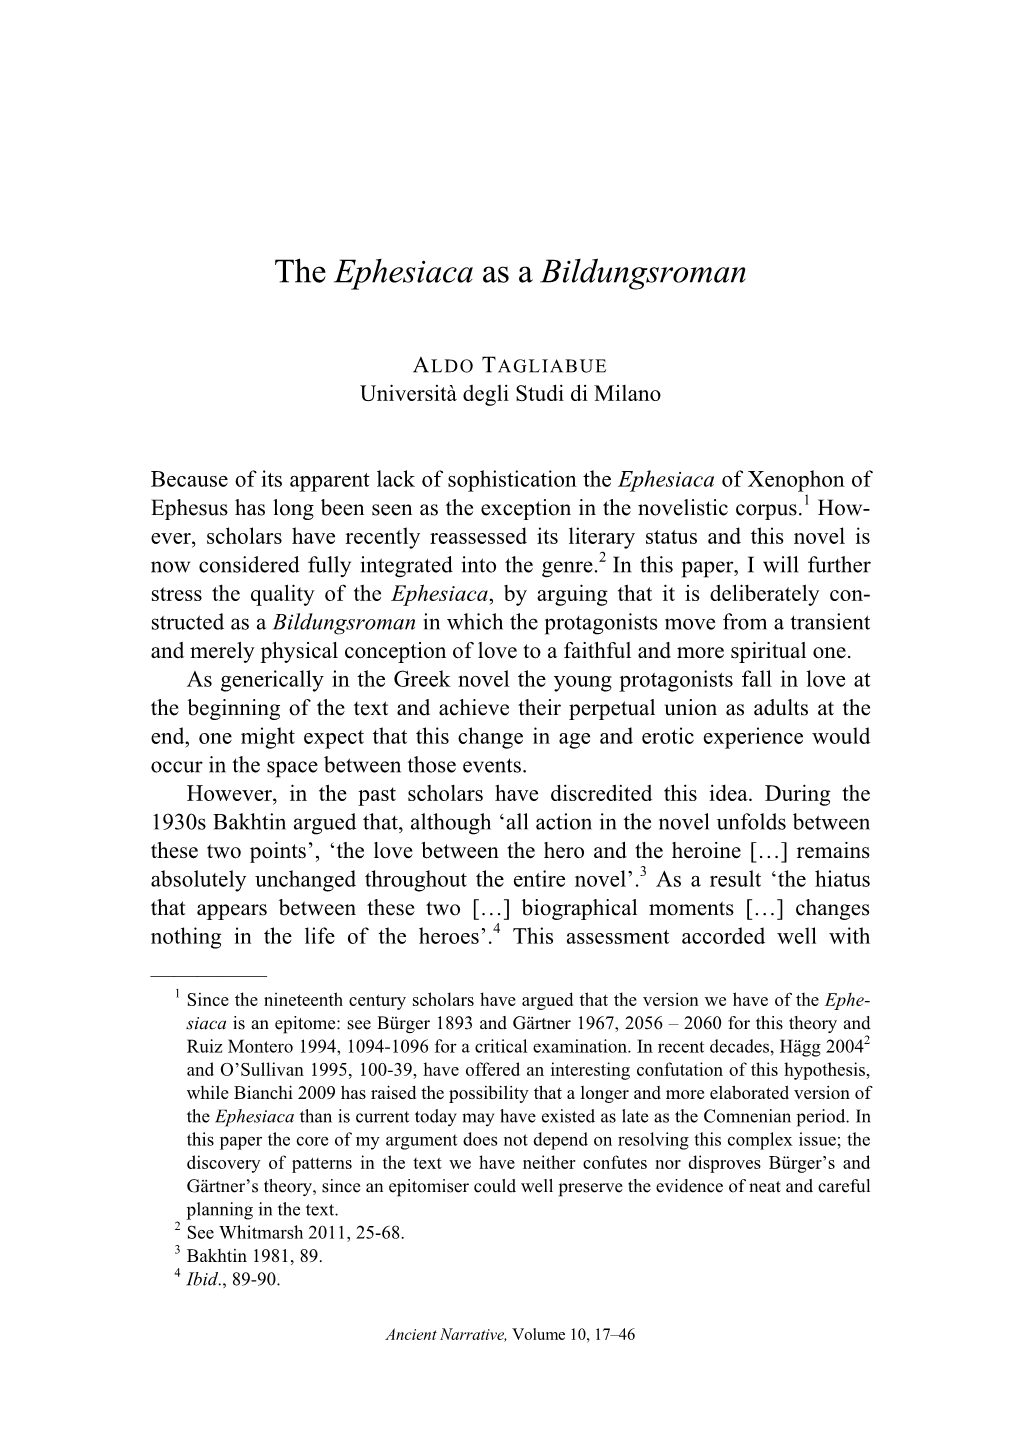 The Ephesiaca As a Bildungsroman